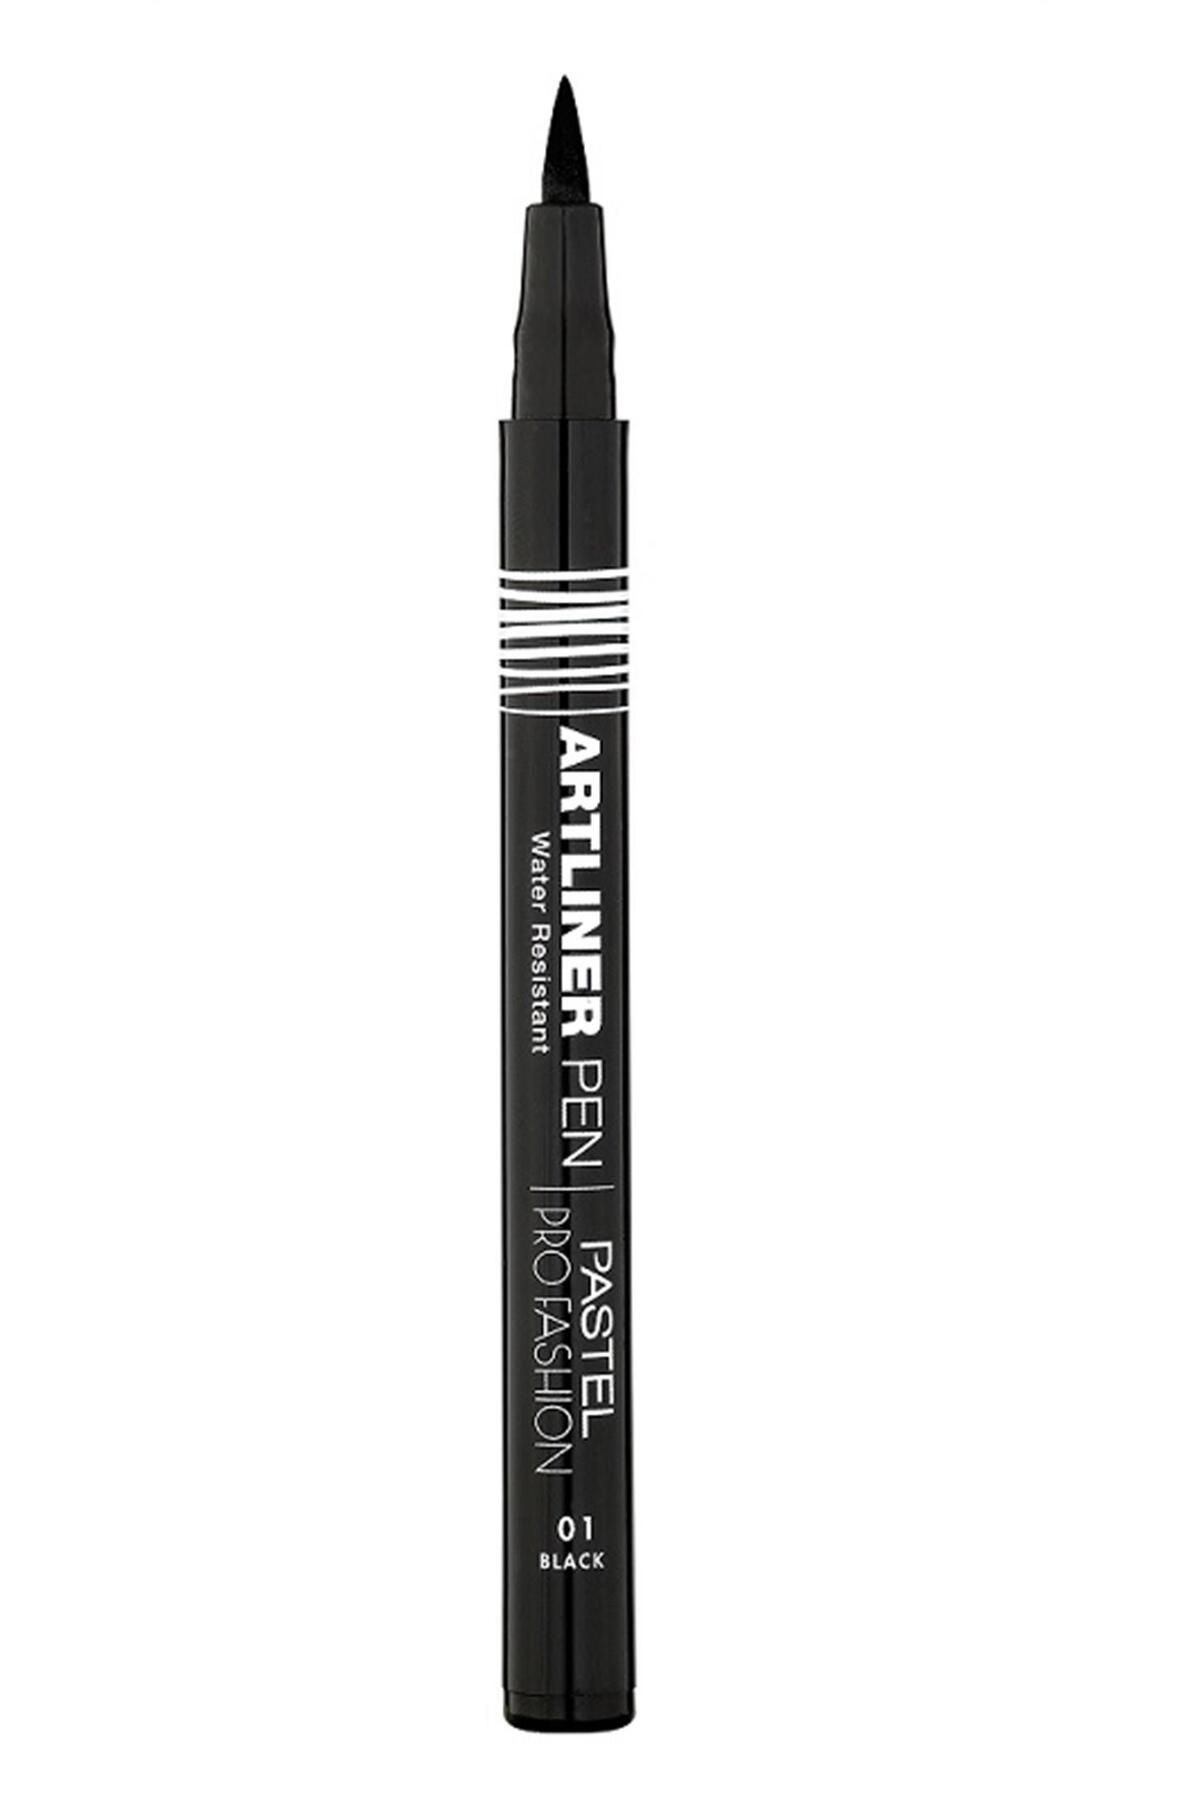 Pastel Profashion Artliner Pen 01 Eyeliner